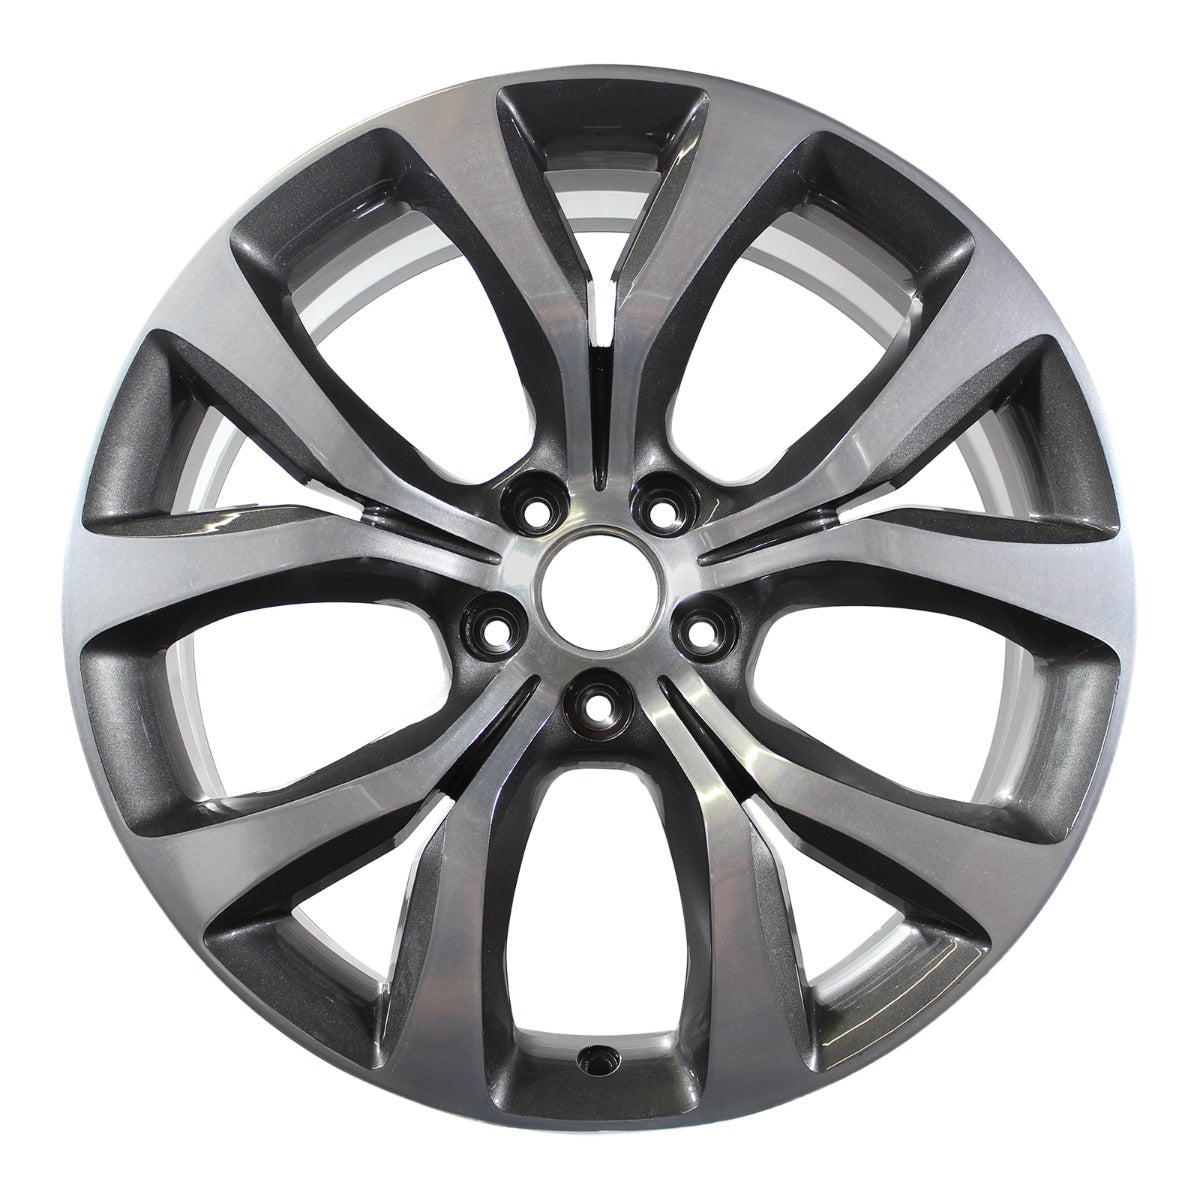 2015 Chrysler 200 19" OEM Wheel Rim W2515PC